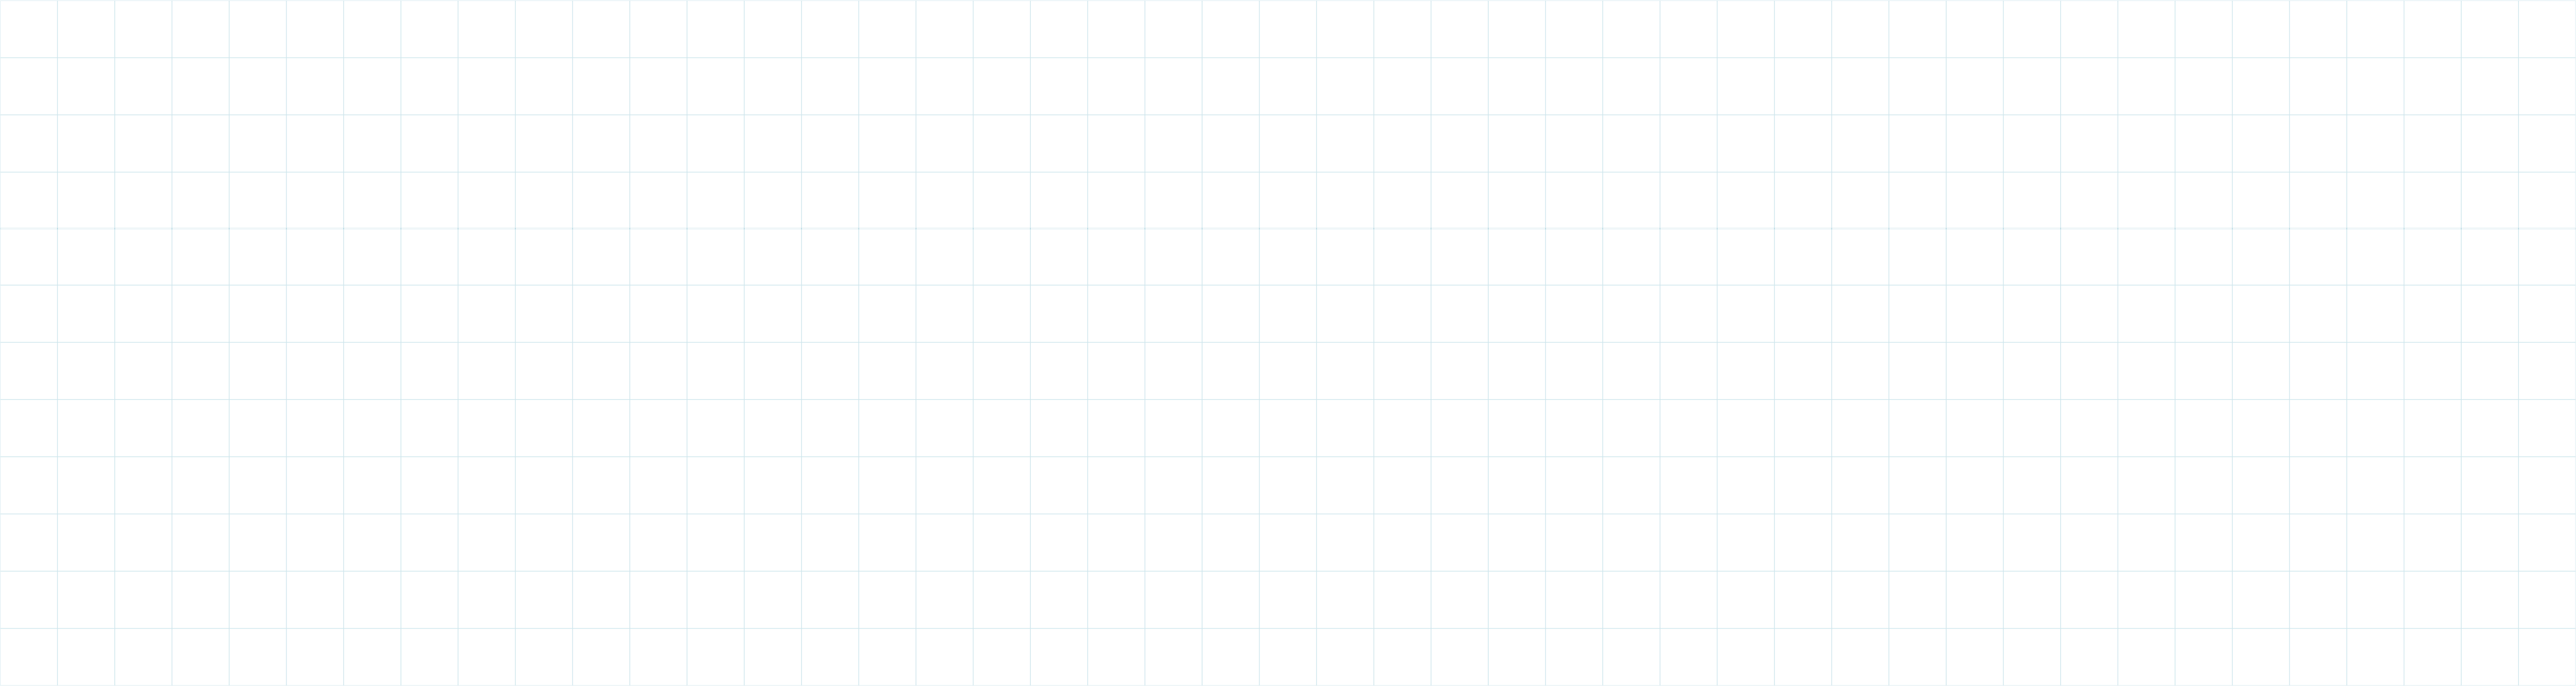 a blue grid background image